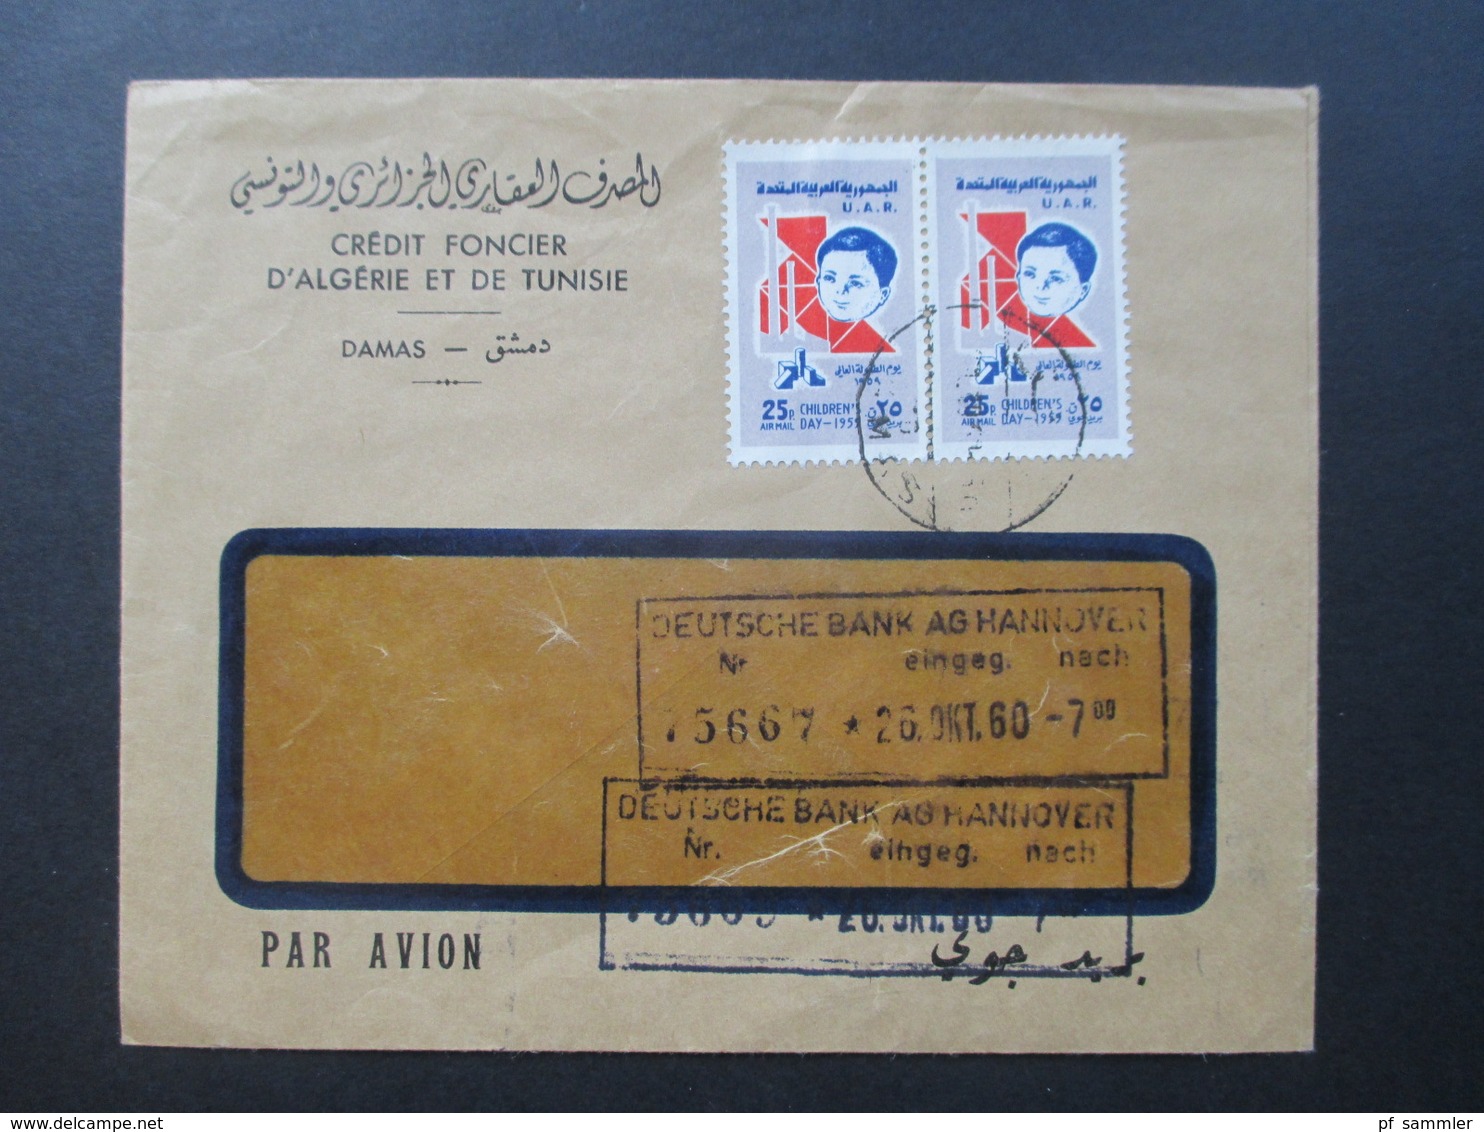 Syrien / UAR 1960 Air Mail / Luftpost Credit Foncier D'Algerie Et De Tunisie Damas. Marken Children's Day 1959 - Syrië